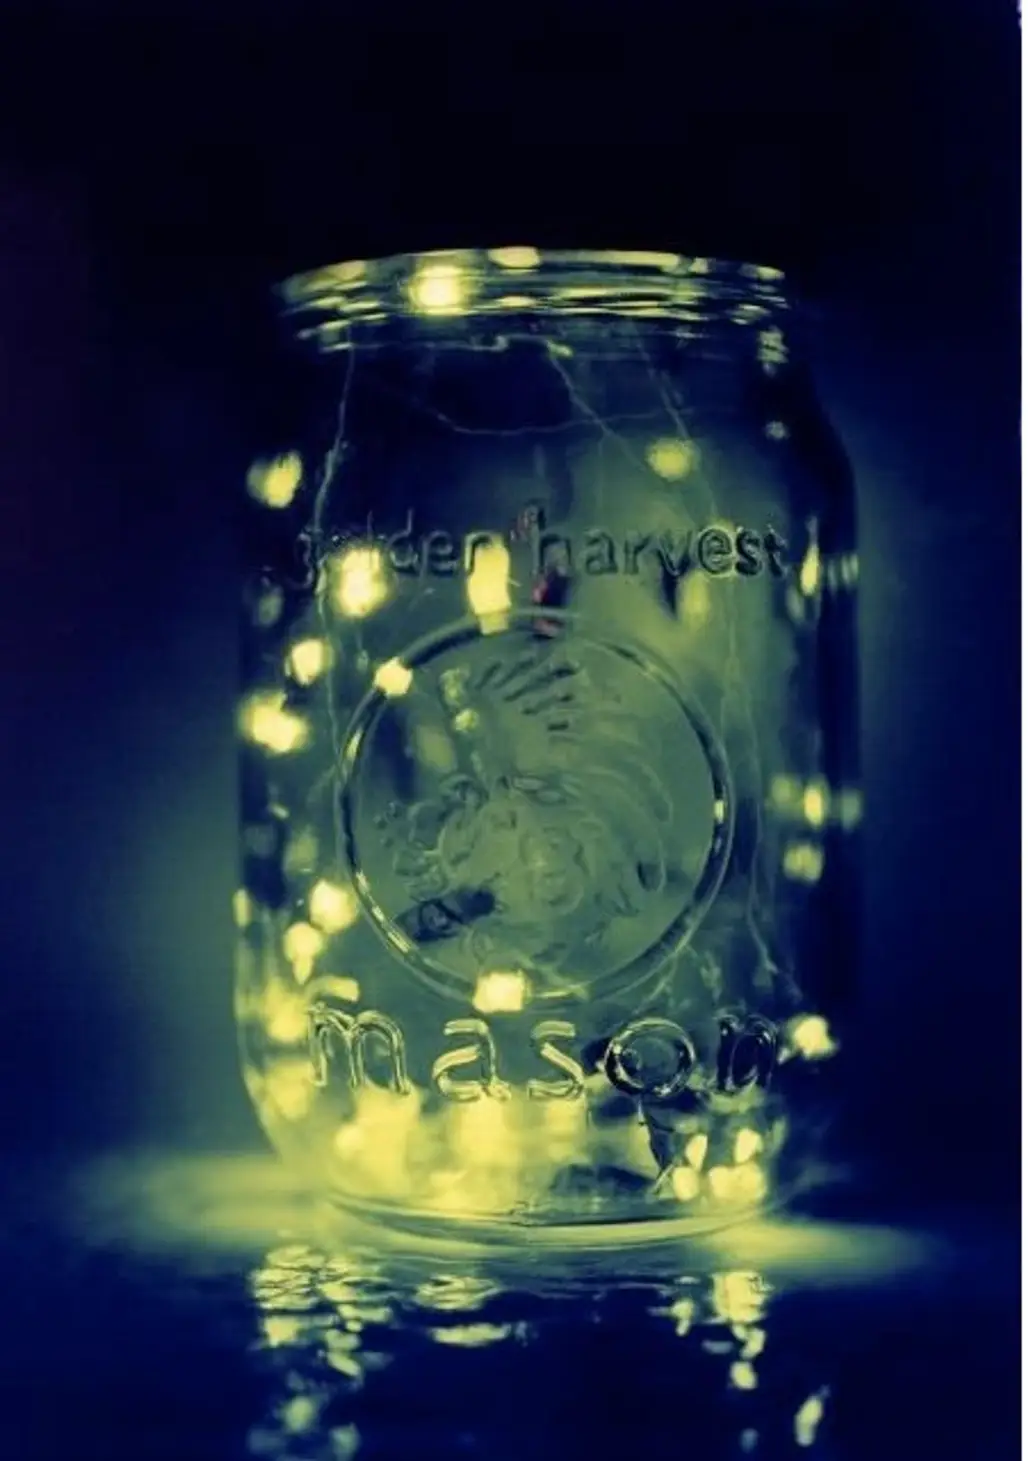 Catch Fireflies in a Jar